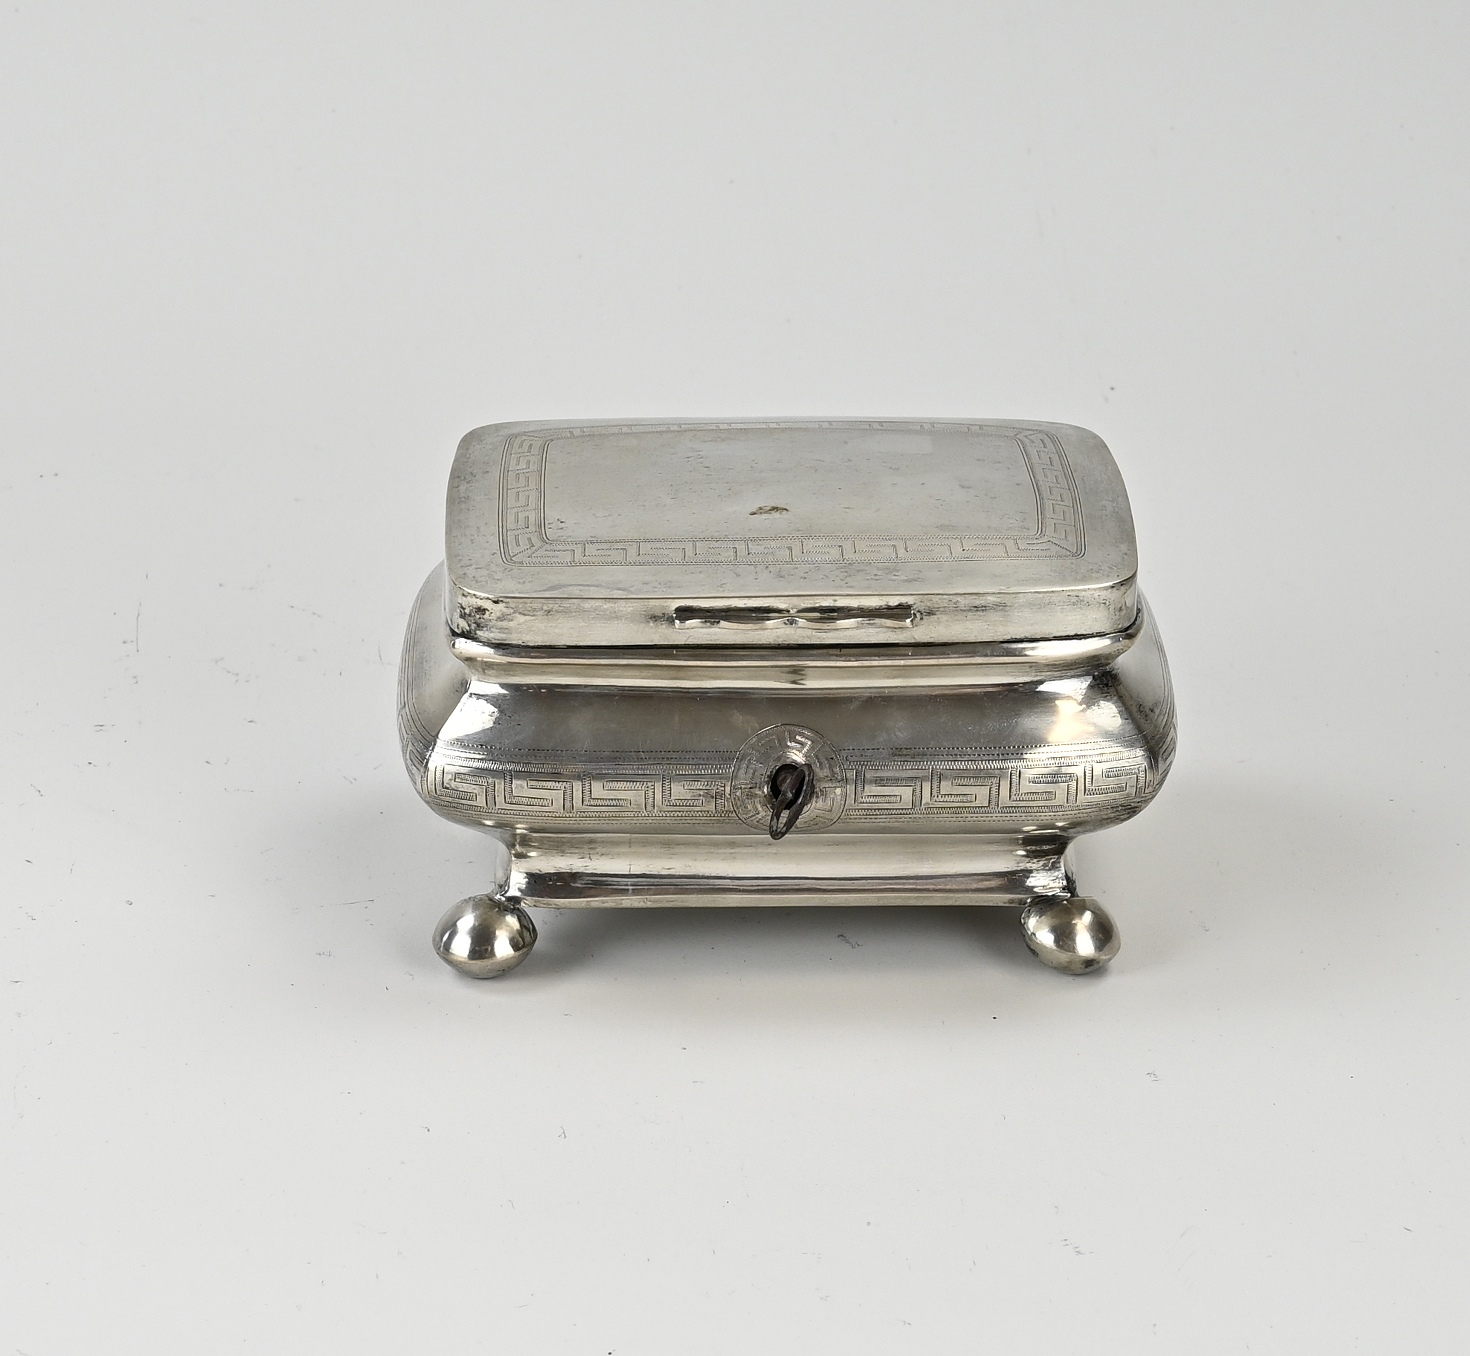 Silver tea box with key